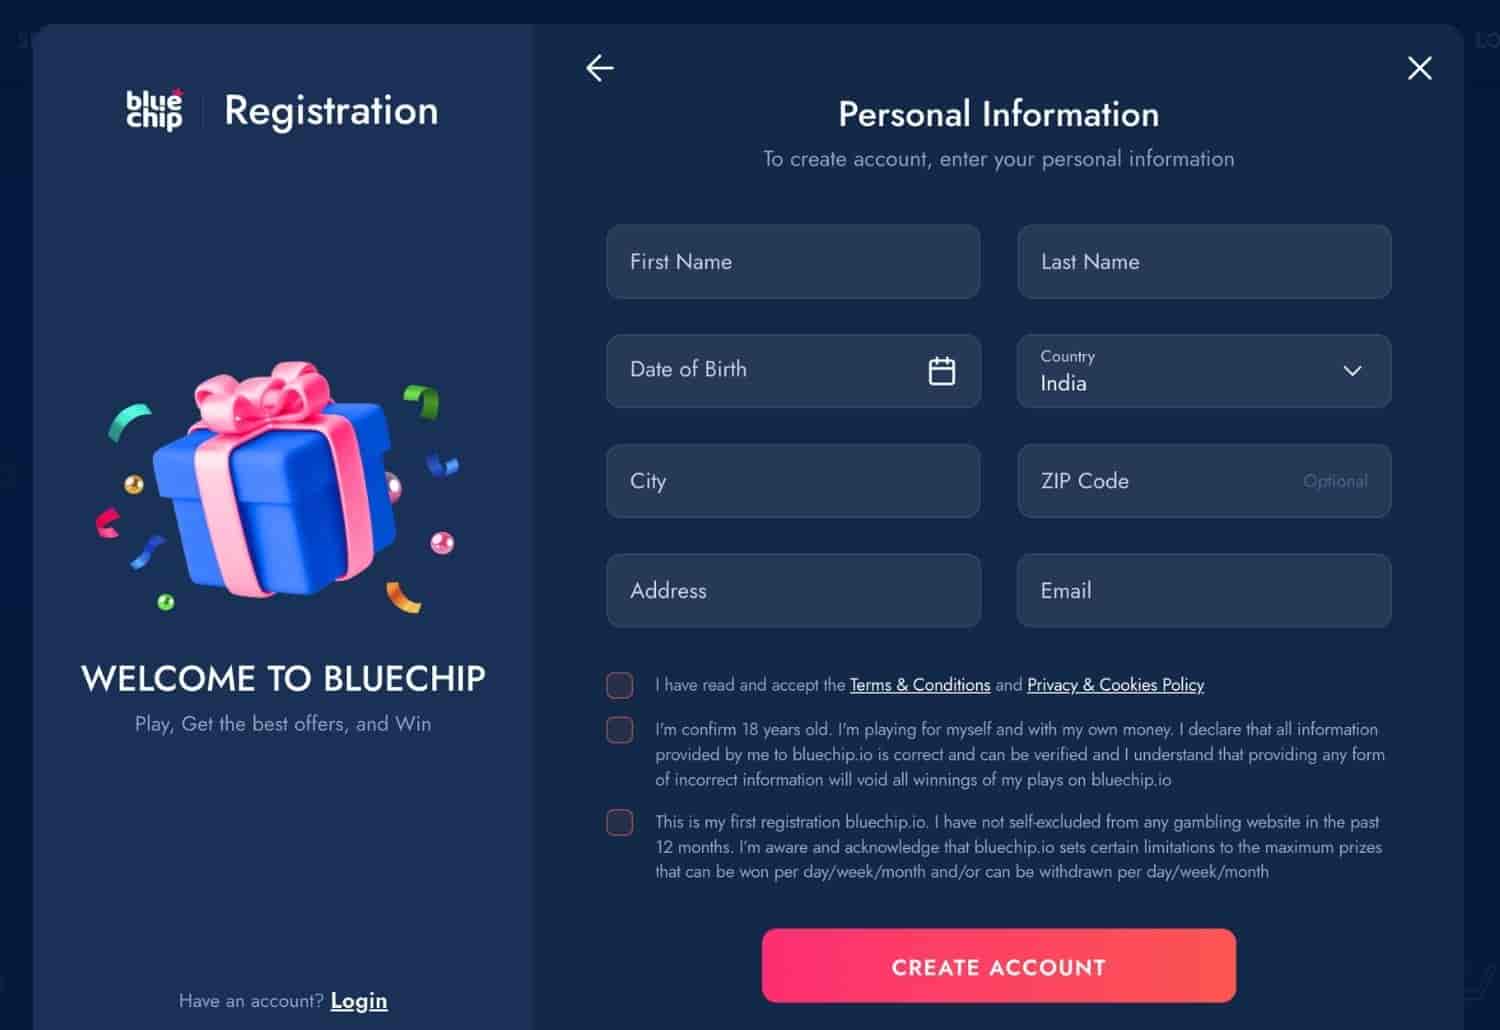 Bluechip Casino India personal information registration form instruction